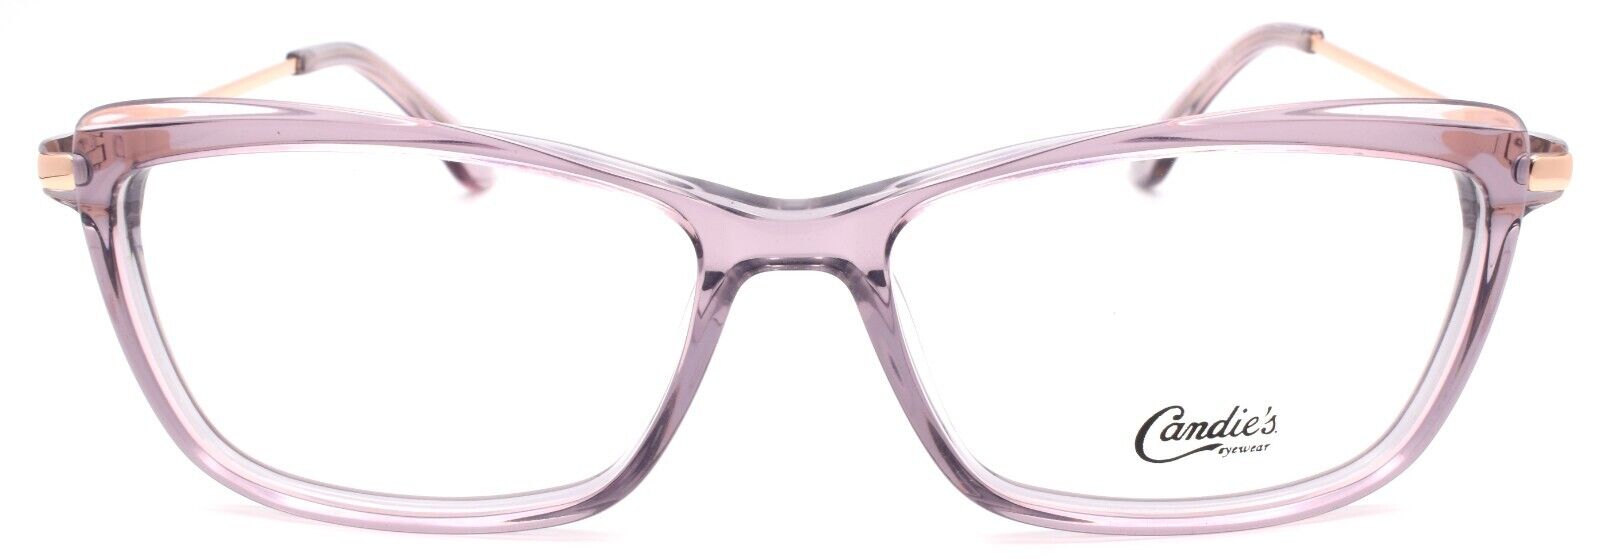 2-Candies CA0174 020 Women's Eyeglasses Frames 54-15-140 Grey Crystal / Gold-889214071552-IKSpecs